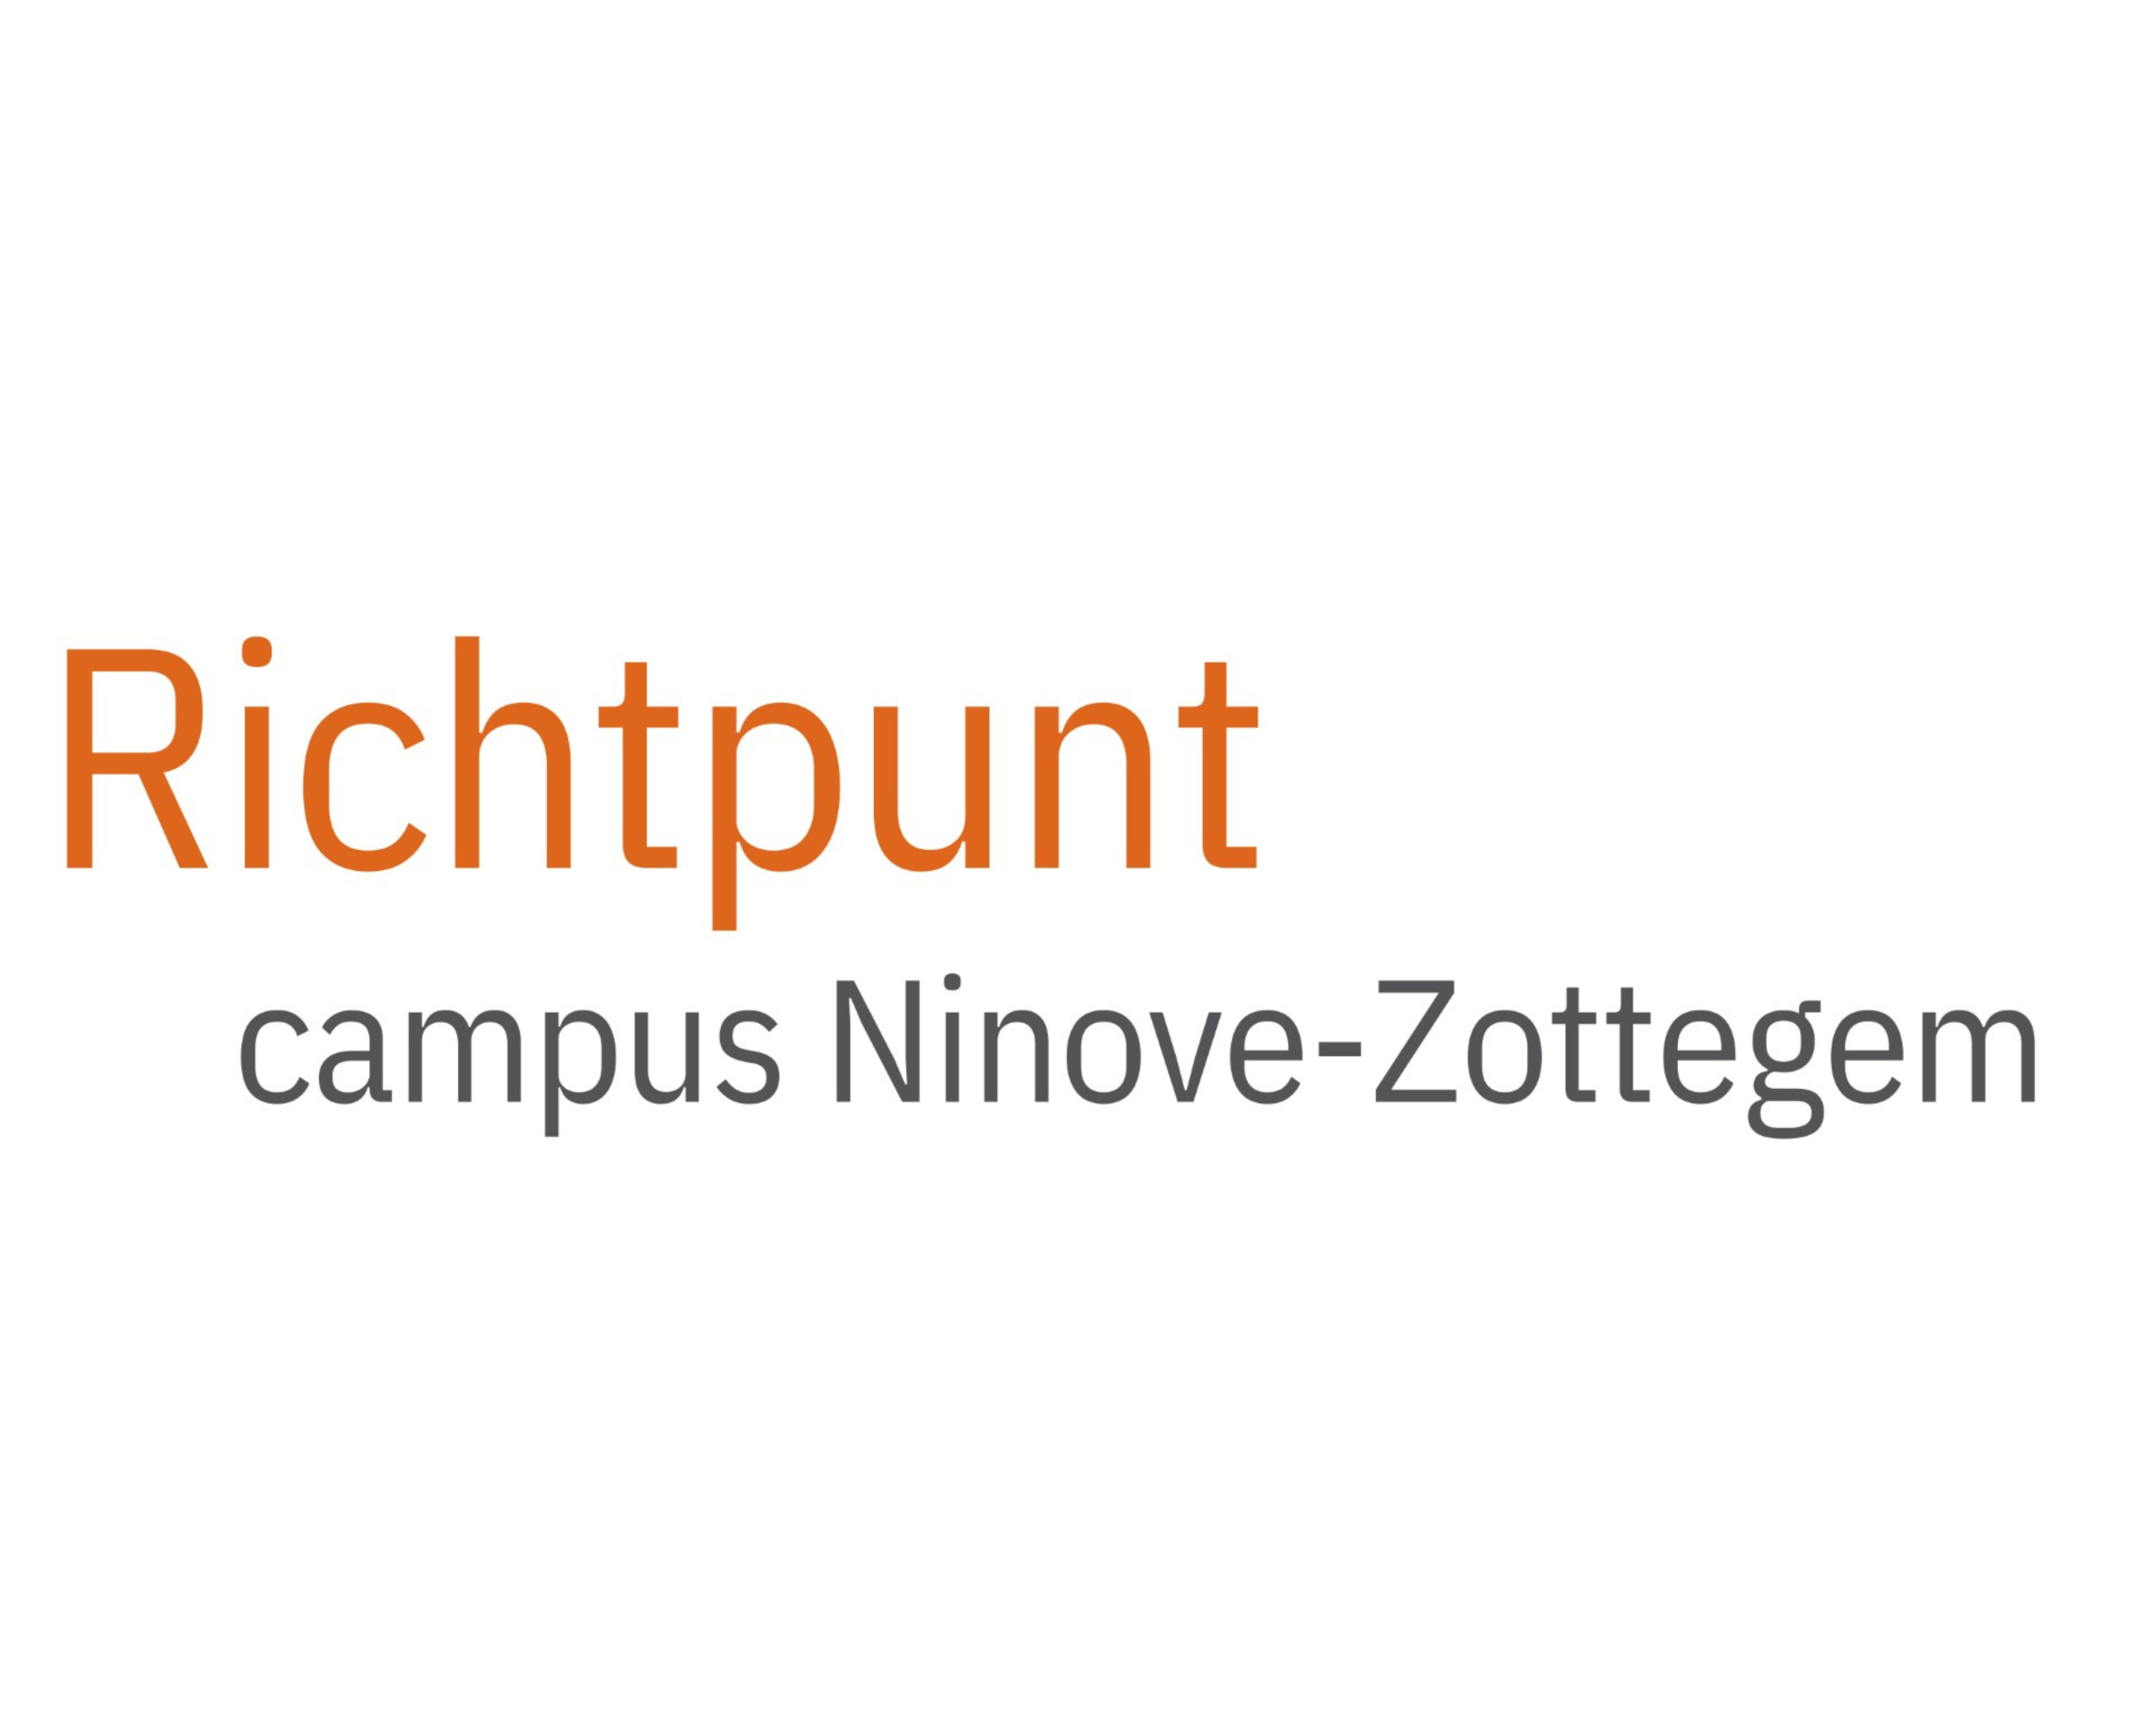 Richtpunt Campus Ninove-Zottegem